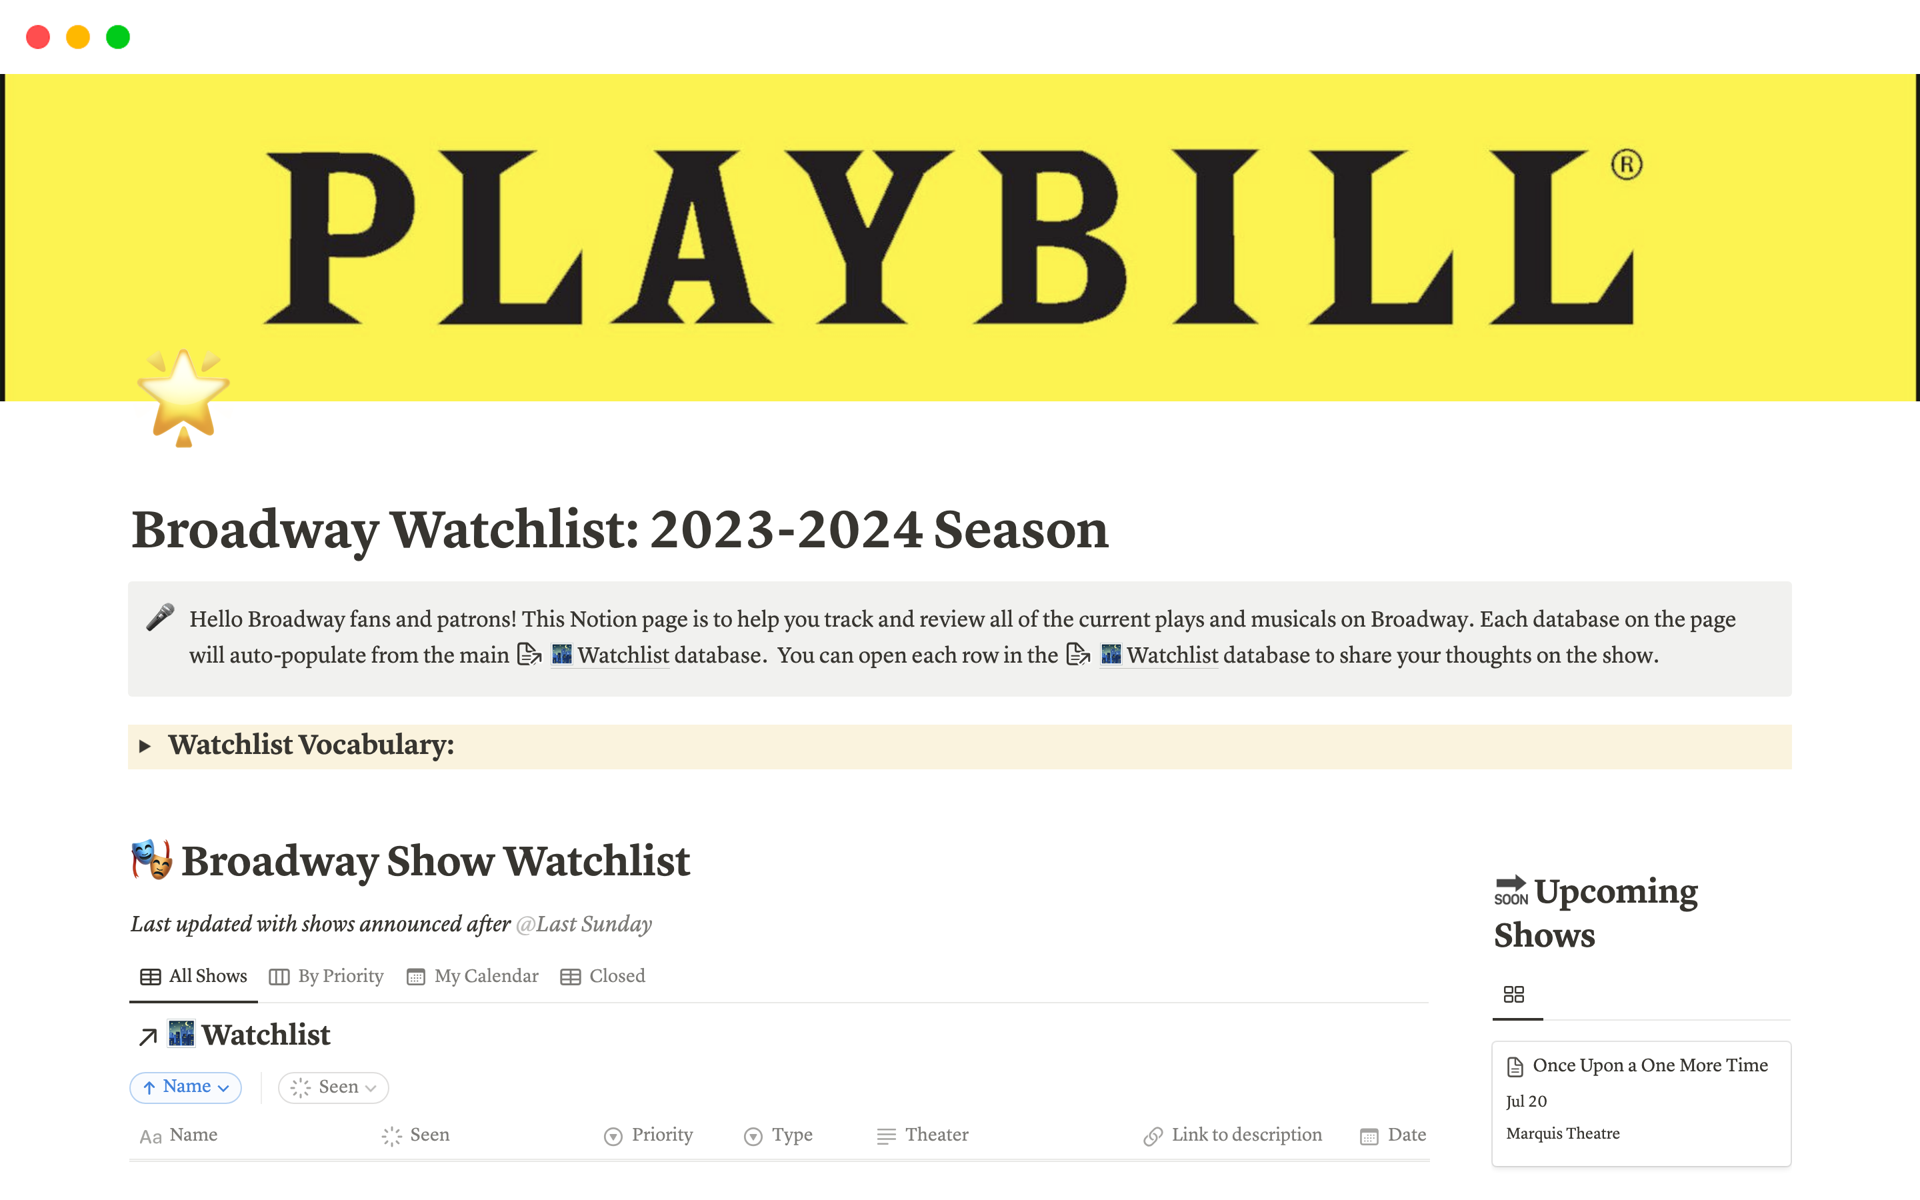 Aperçu du modèle de Broadway Watchlist: 2023-2024 Season